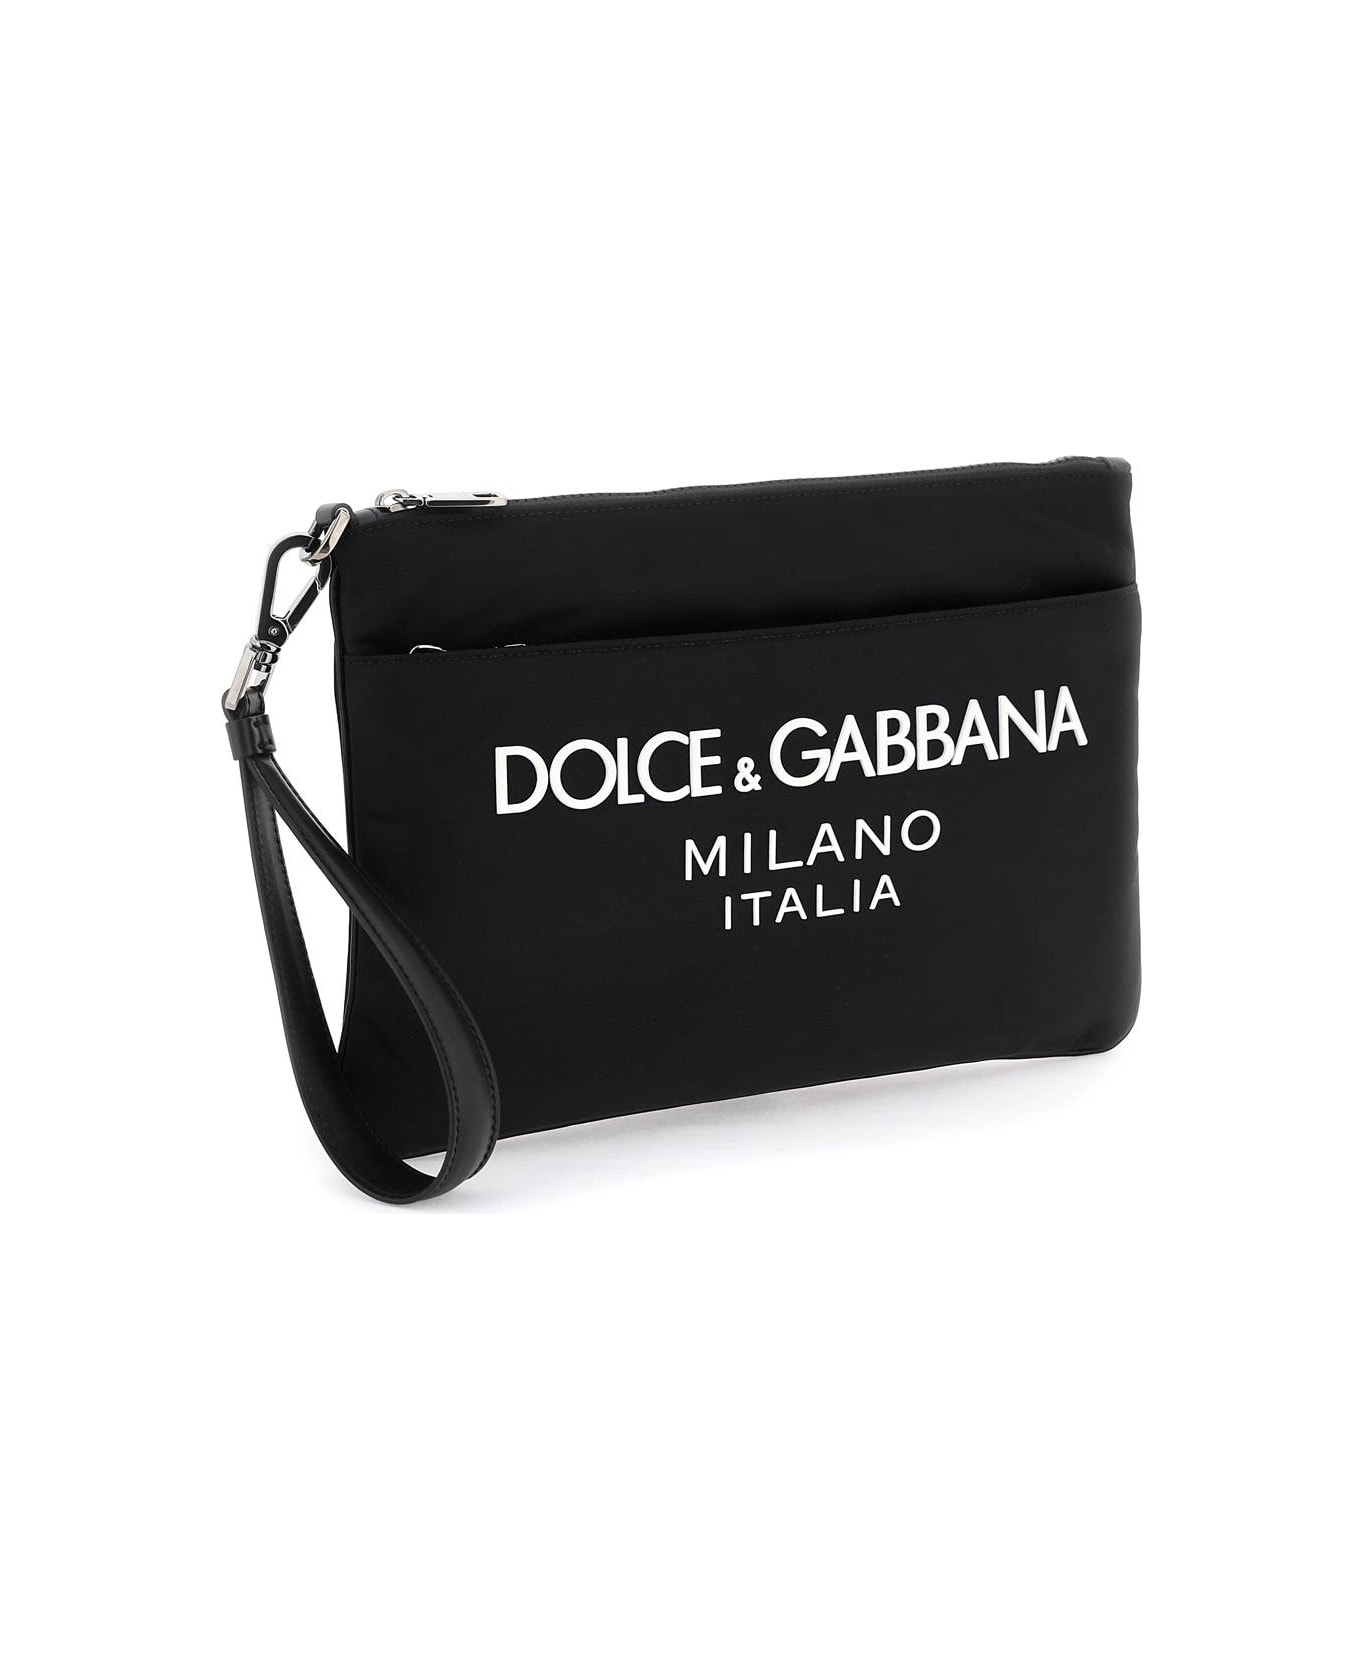 Dolce & Gabbana Beauty Case - Nero/nero